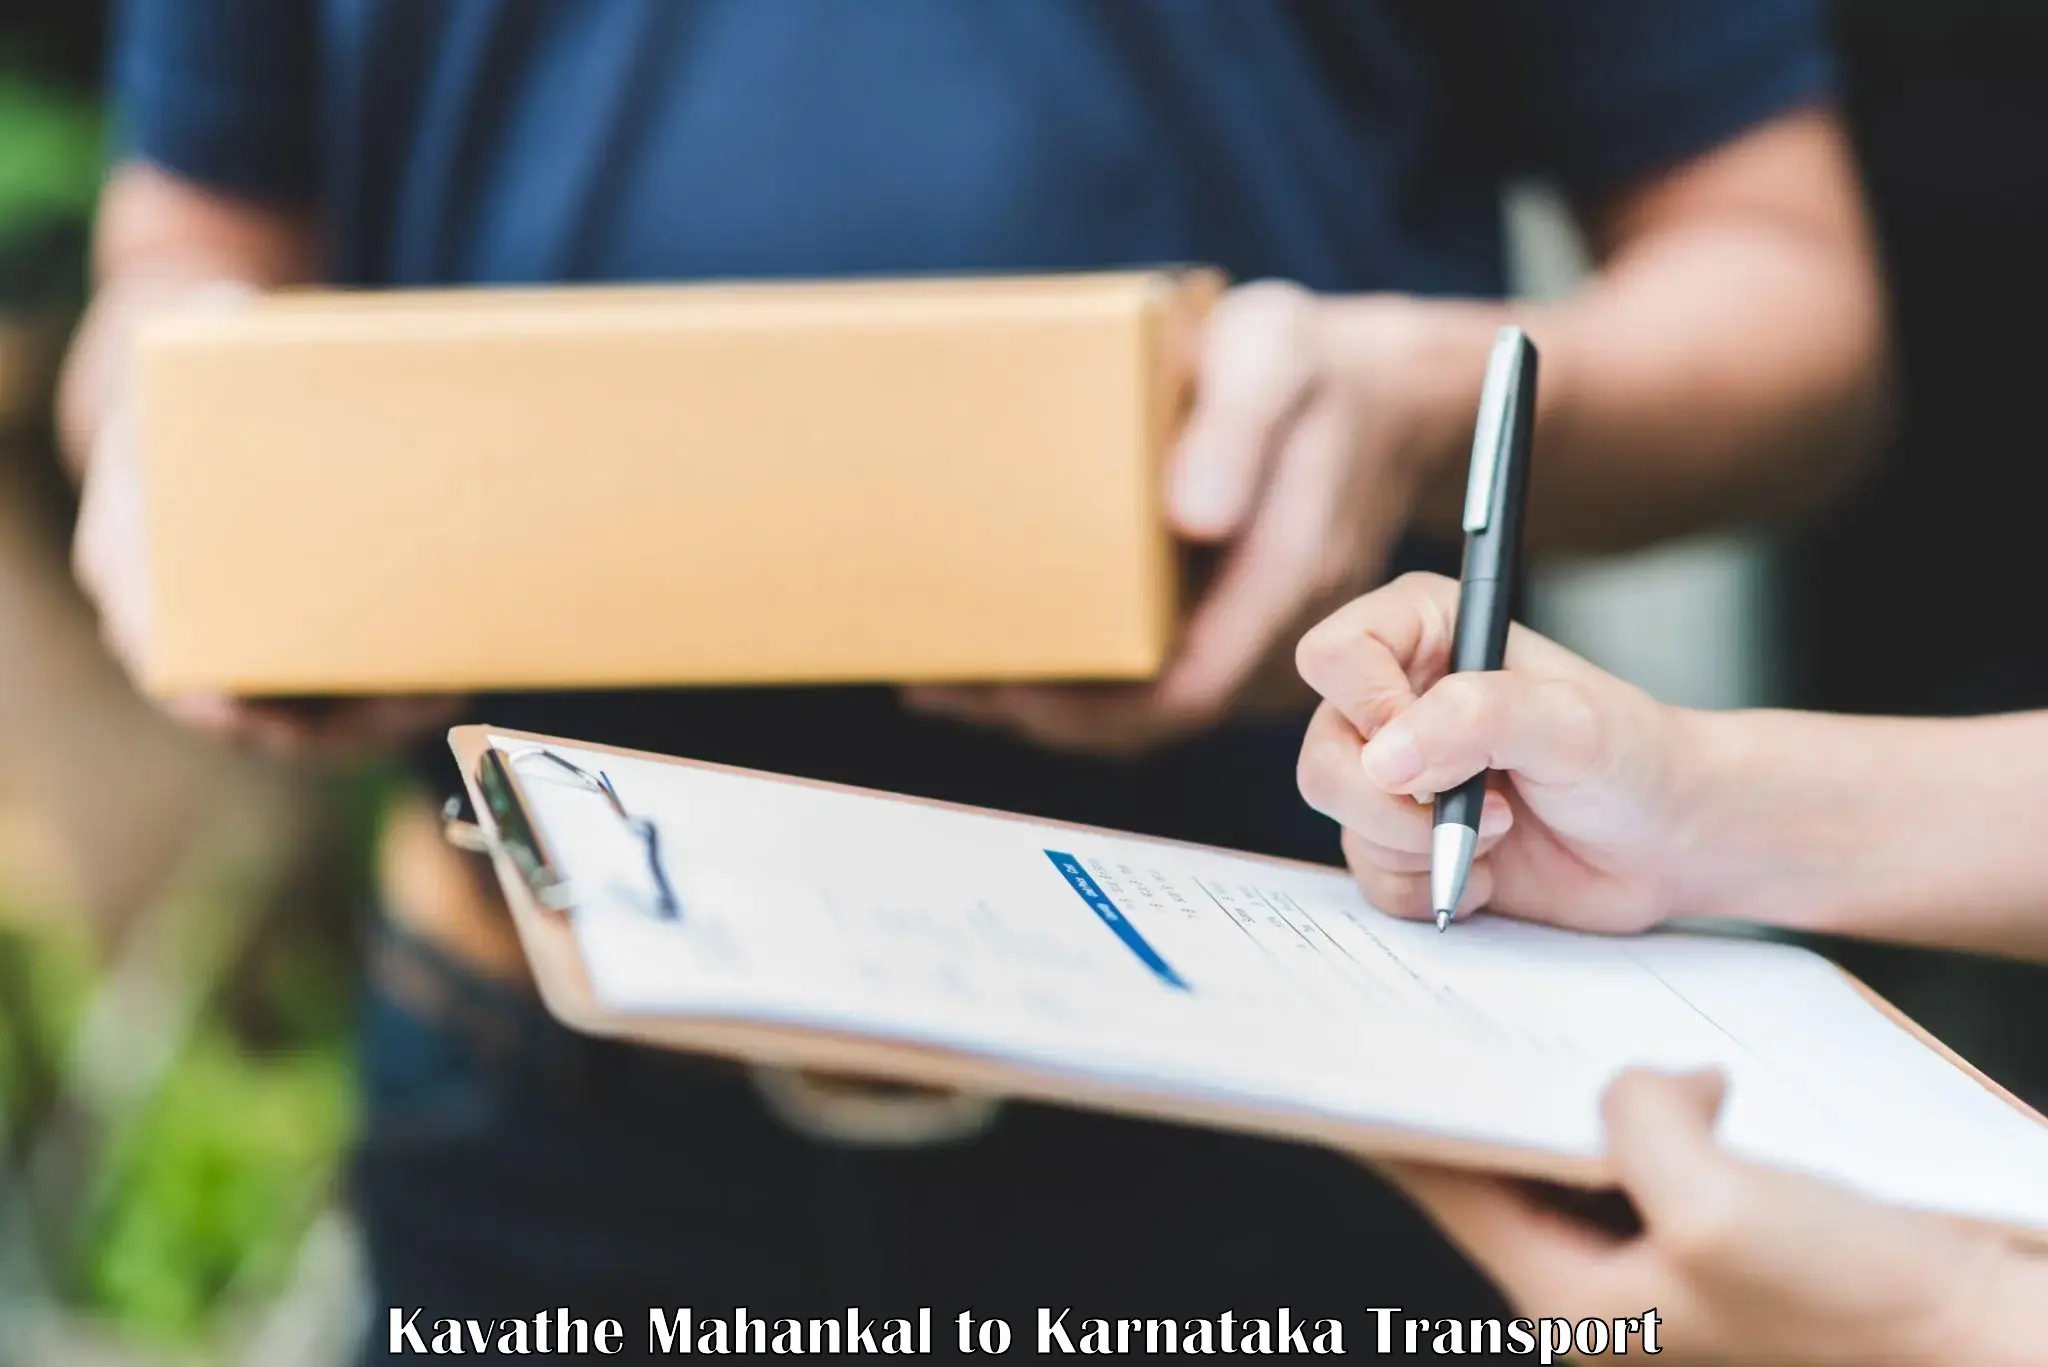 Road transport online services Kavathe Mahankal to Karnataka